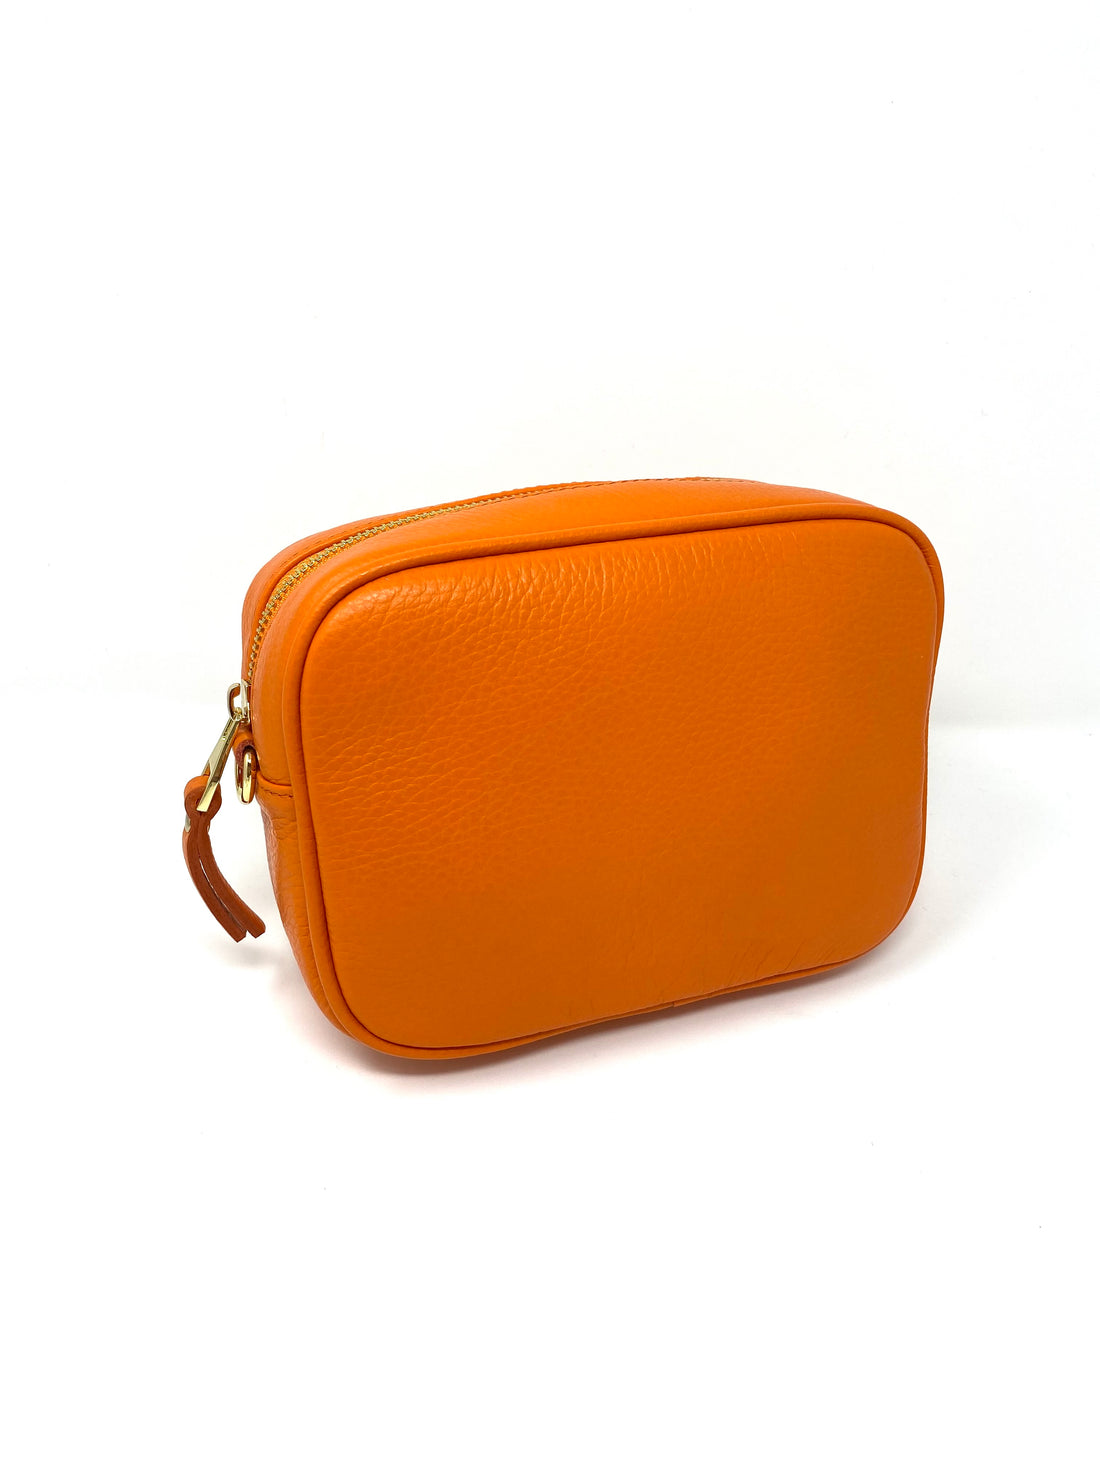 Firenze Bag in Tangerine